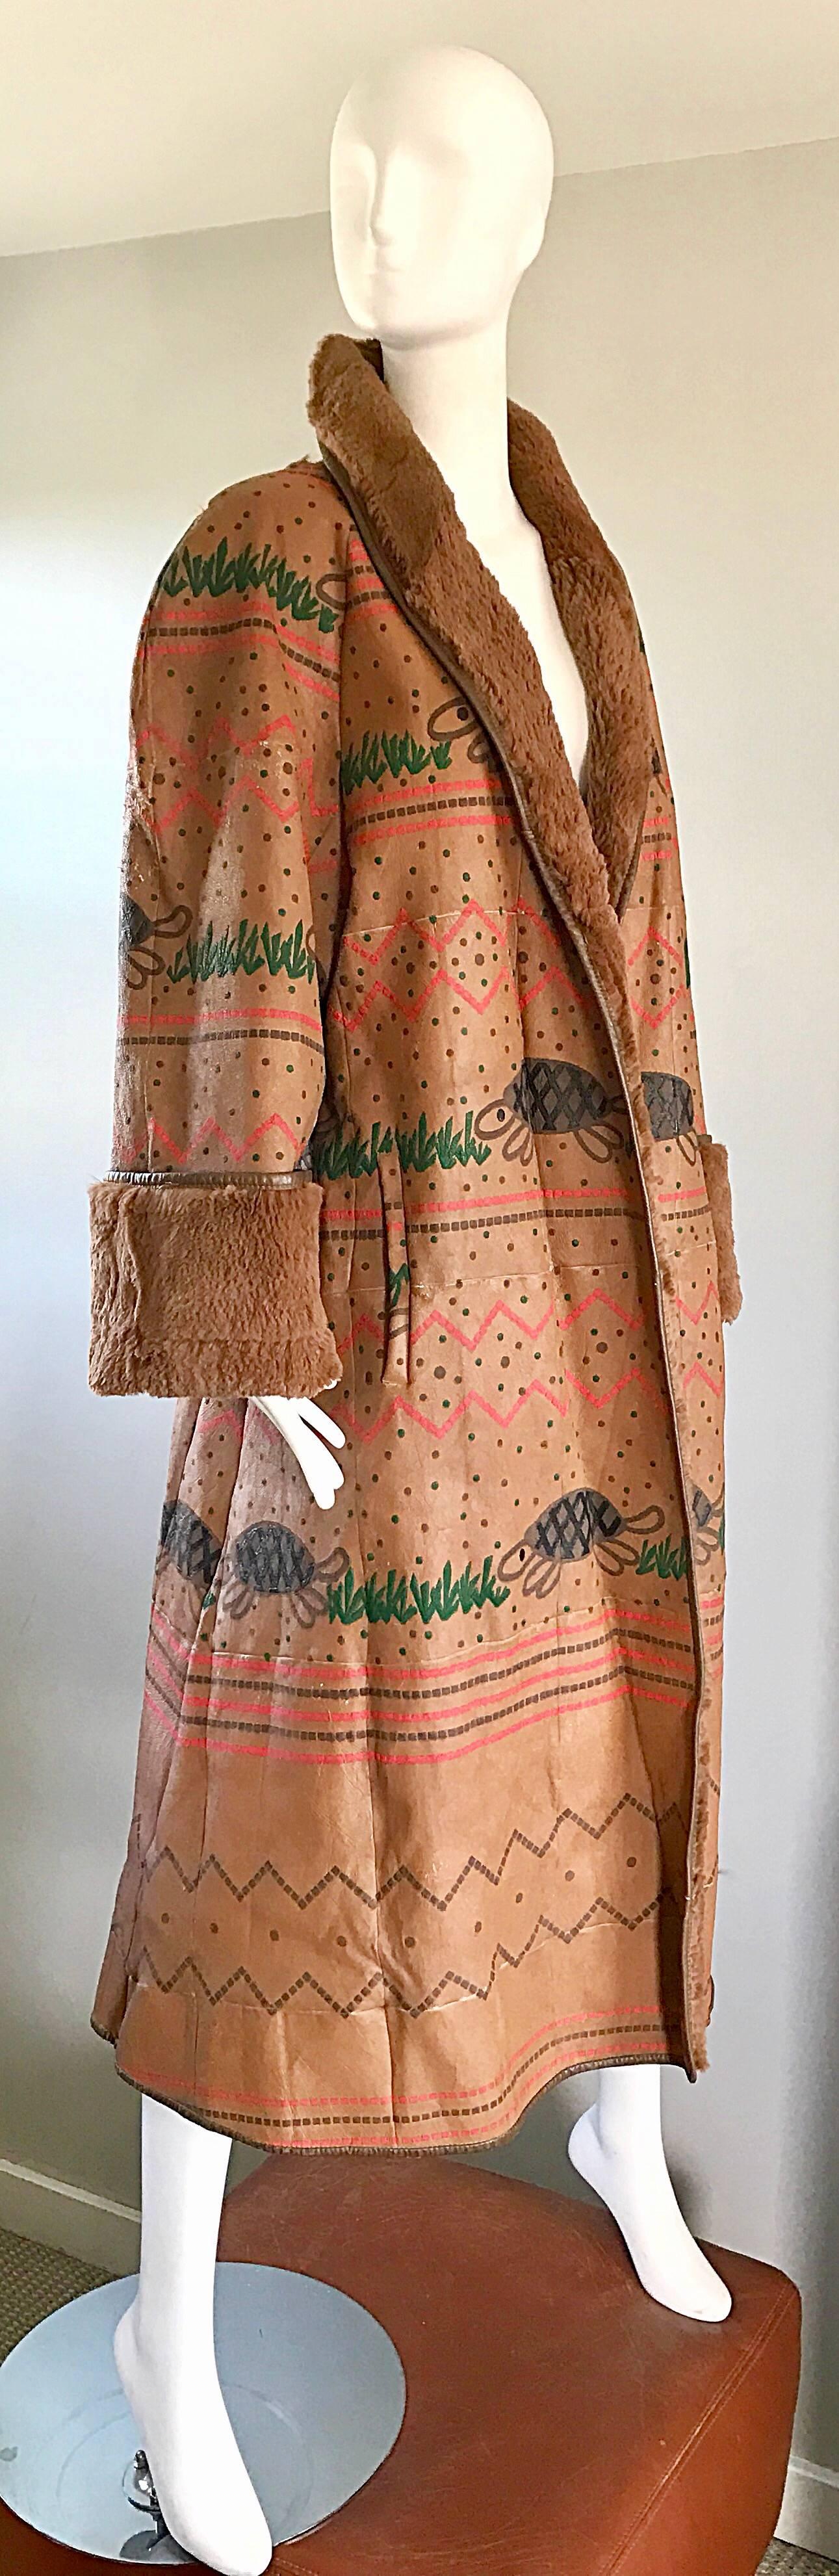 Seltene Vintage Jean Charles de Castelbajac Handbemalte Shearling-Lederjacke für Damen oder Herren im Angebot